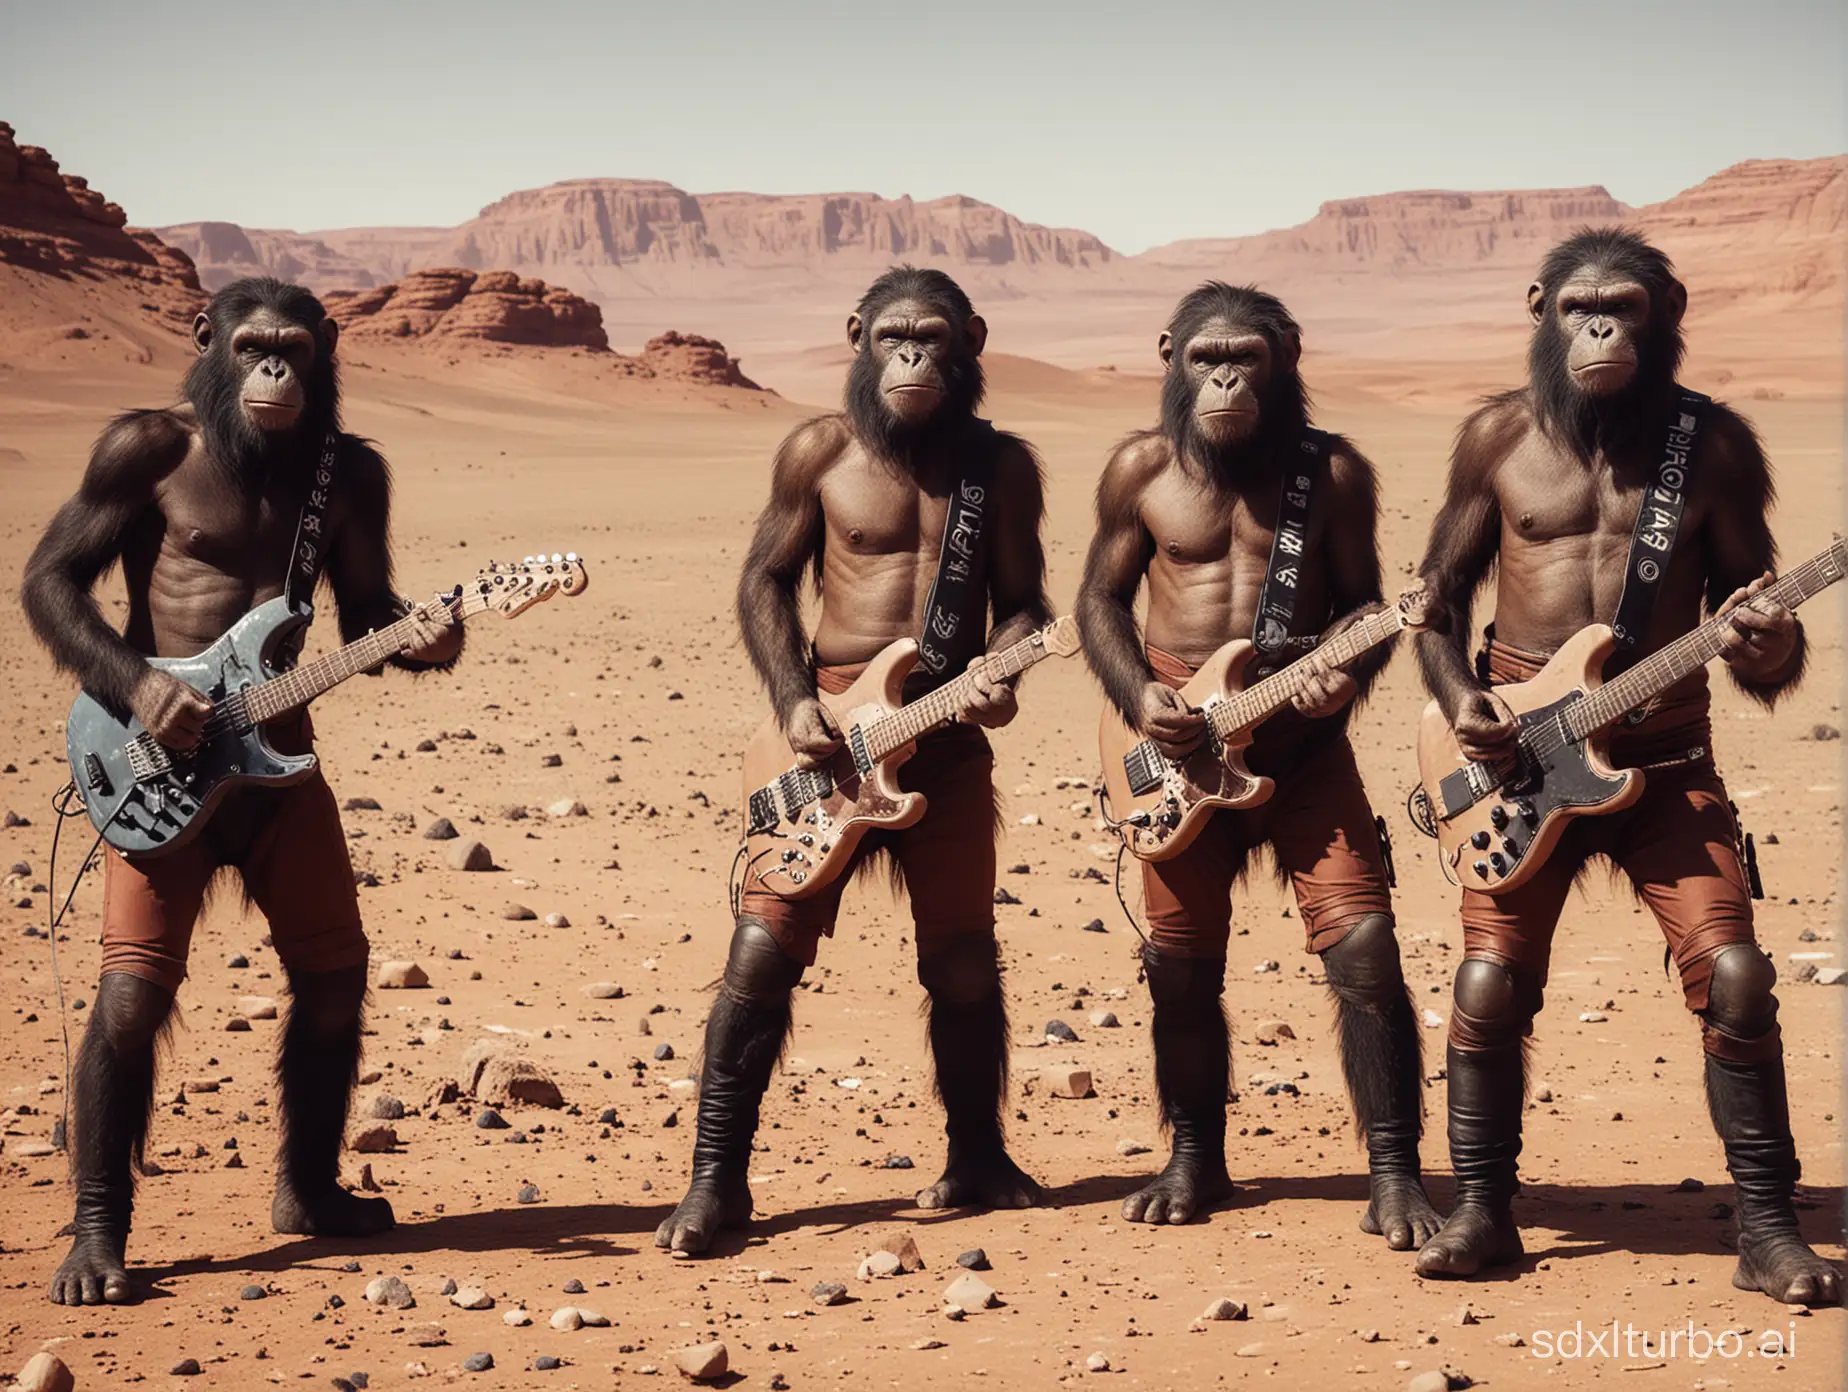 mad made apes punkrock band on mars